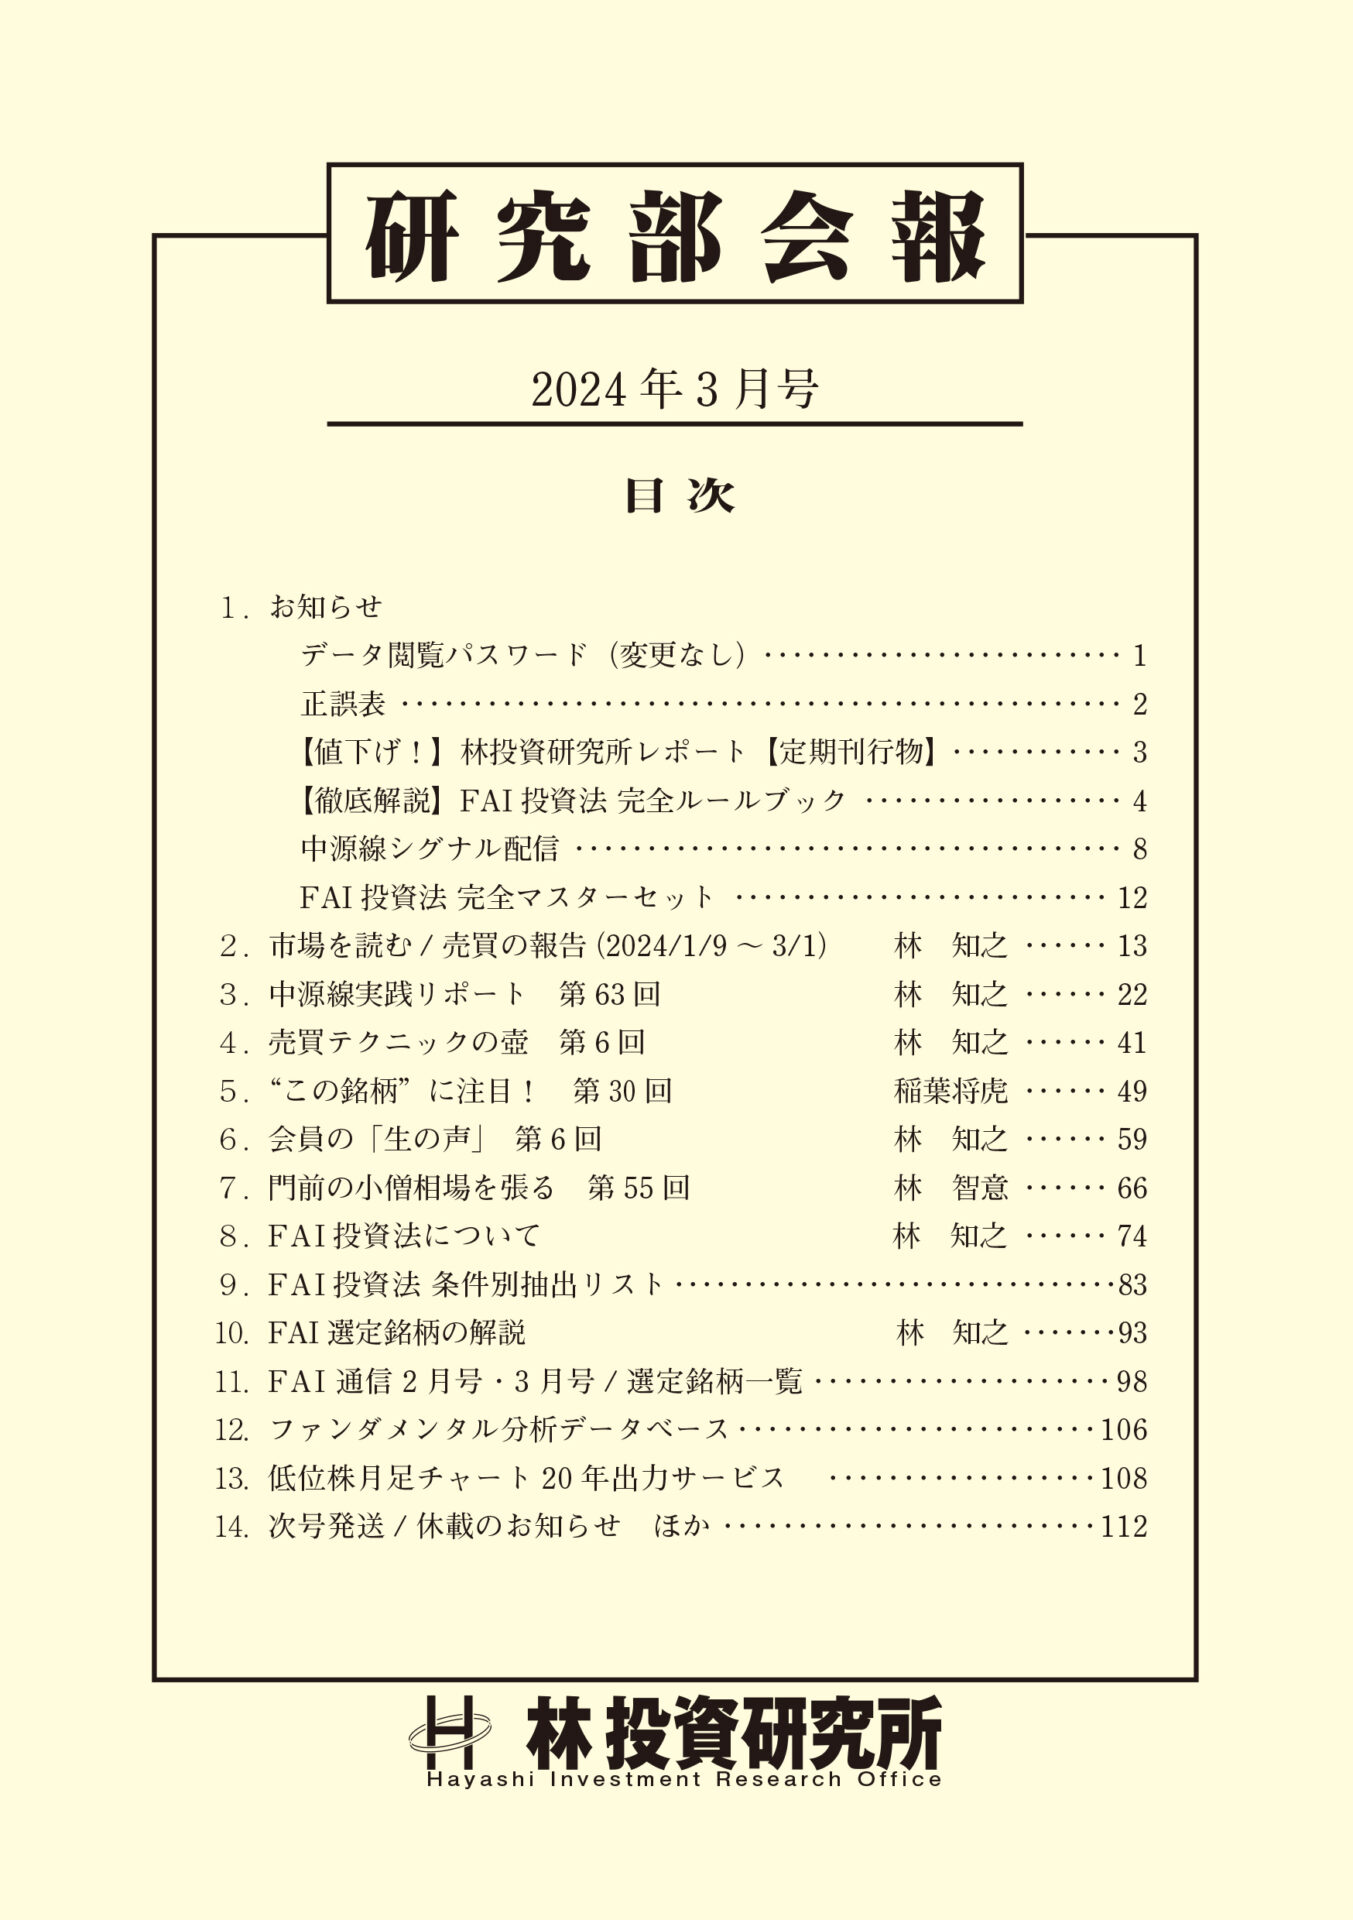 FAIクラブの株式投資法 FAI選定銘柄およびFAI通信 林輝太郎 - ビジネス 